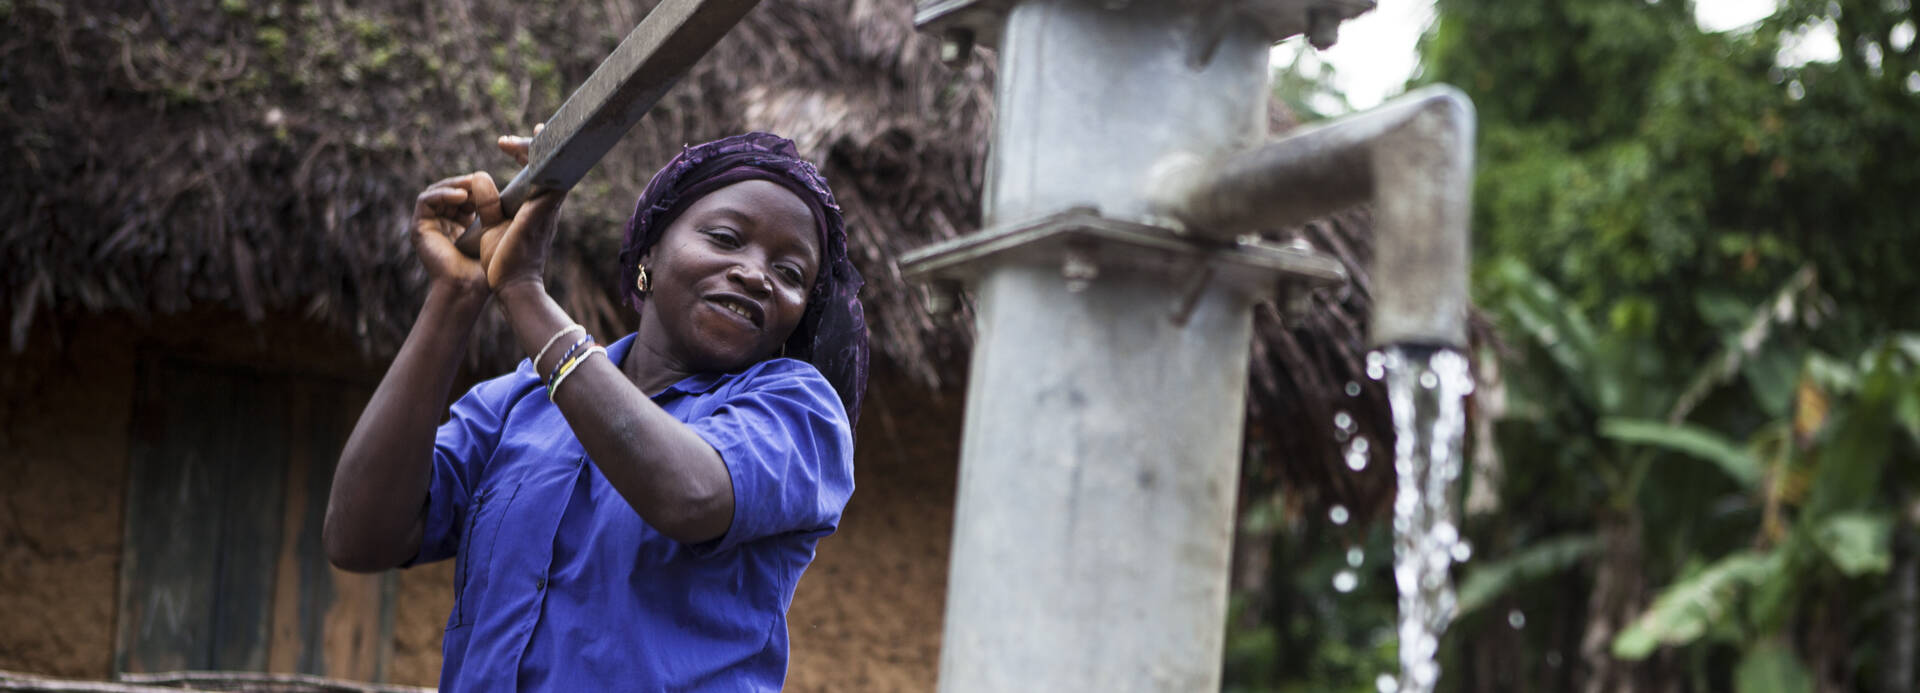 Frau in Sierra Leone betätigt Wasserpumpe.